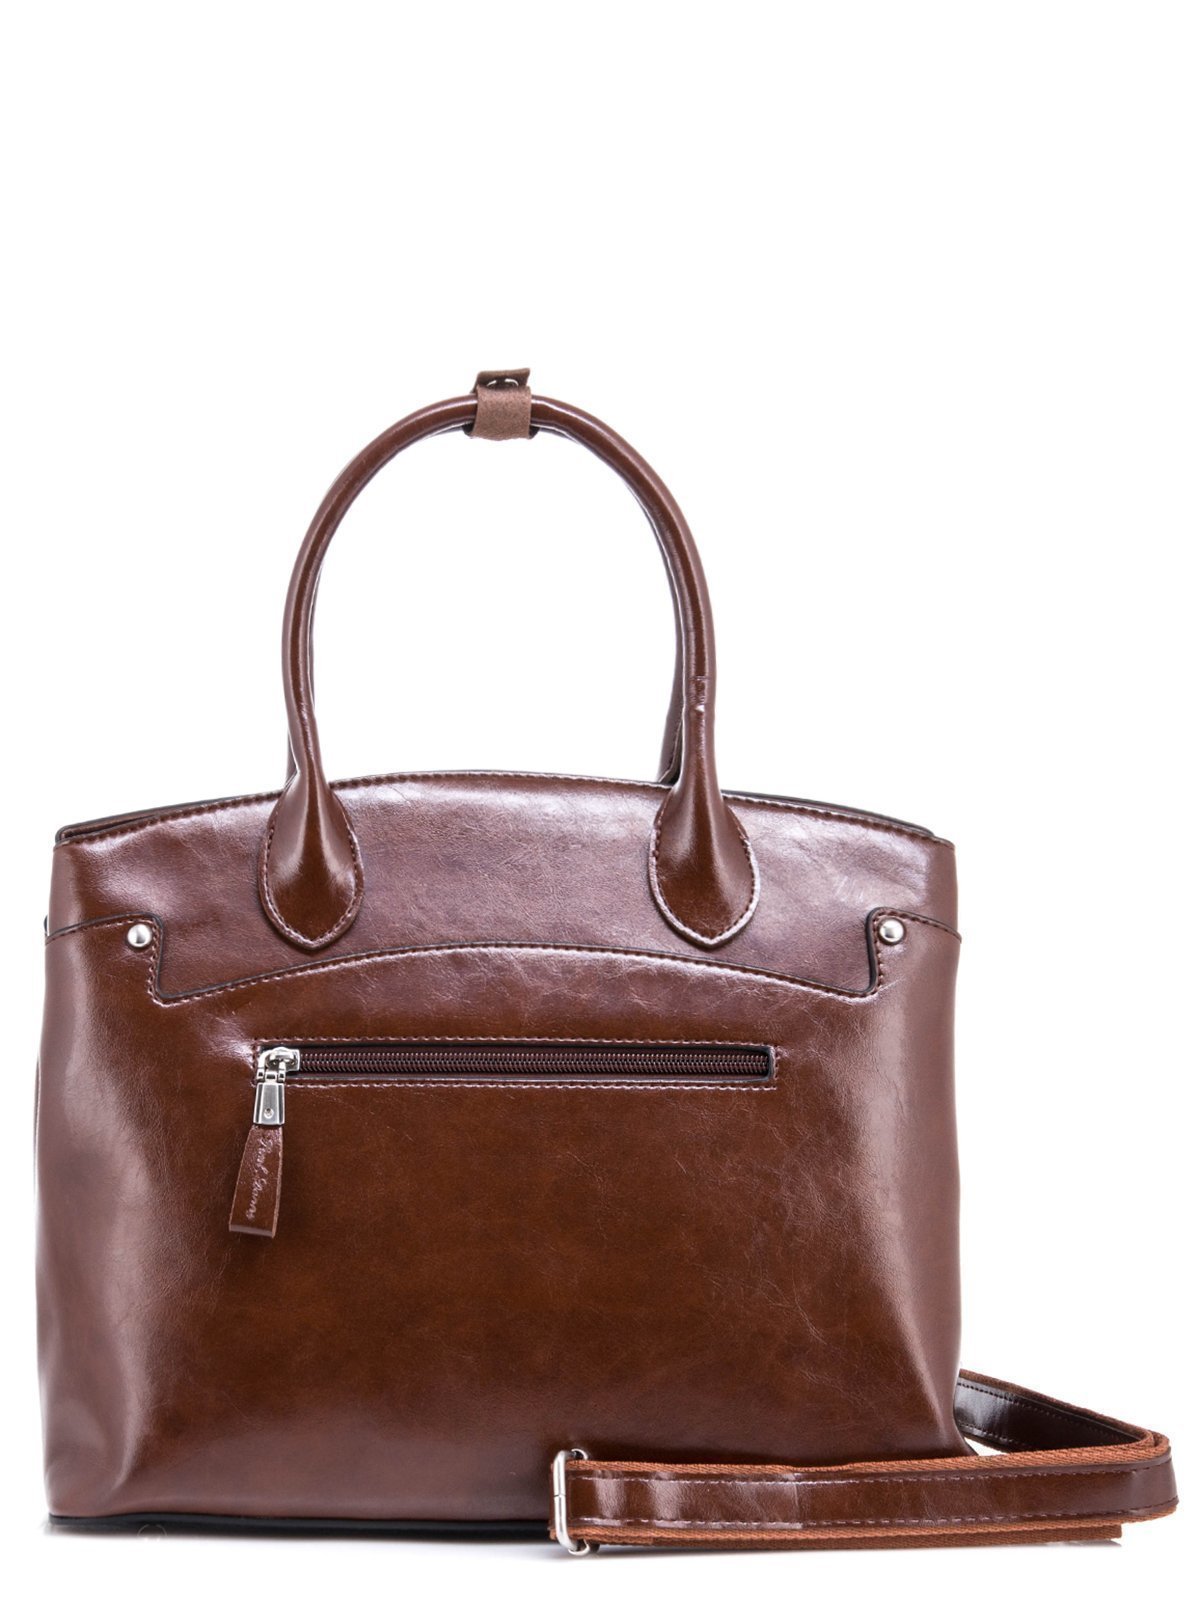 Pauls сумка. Paul Danny сумки. Mirano сумка коричневая. Portofiano сумка коричневая мужская.